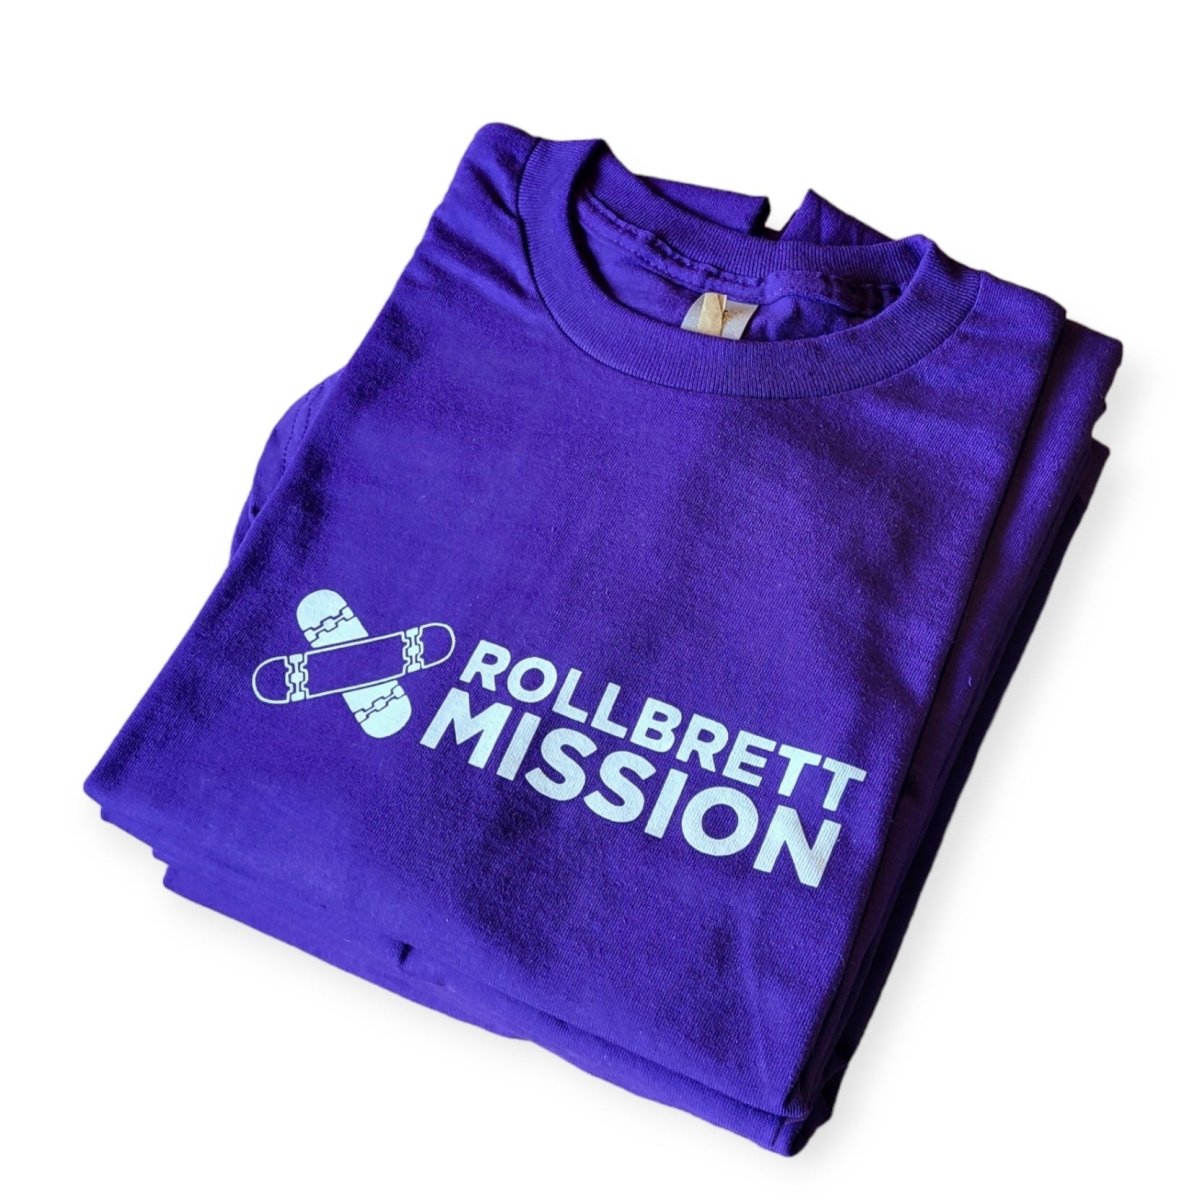 Rollbrett Mission Premium Bar Logo T-Shirt lila - Shirts & Tops - Rollbrett Mission